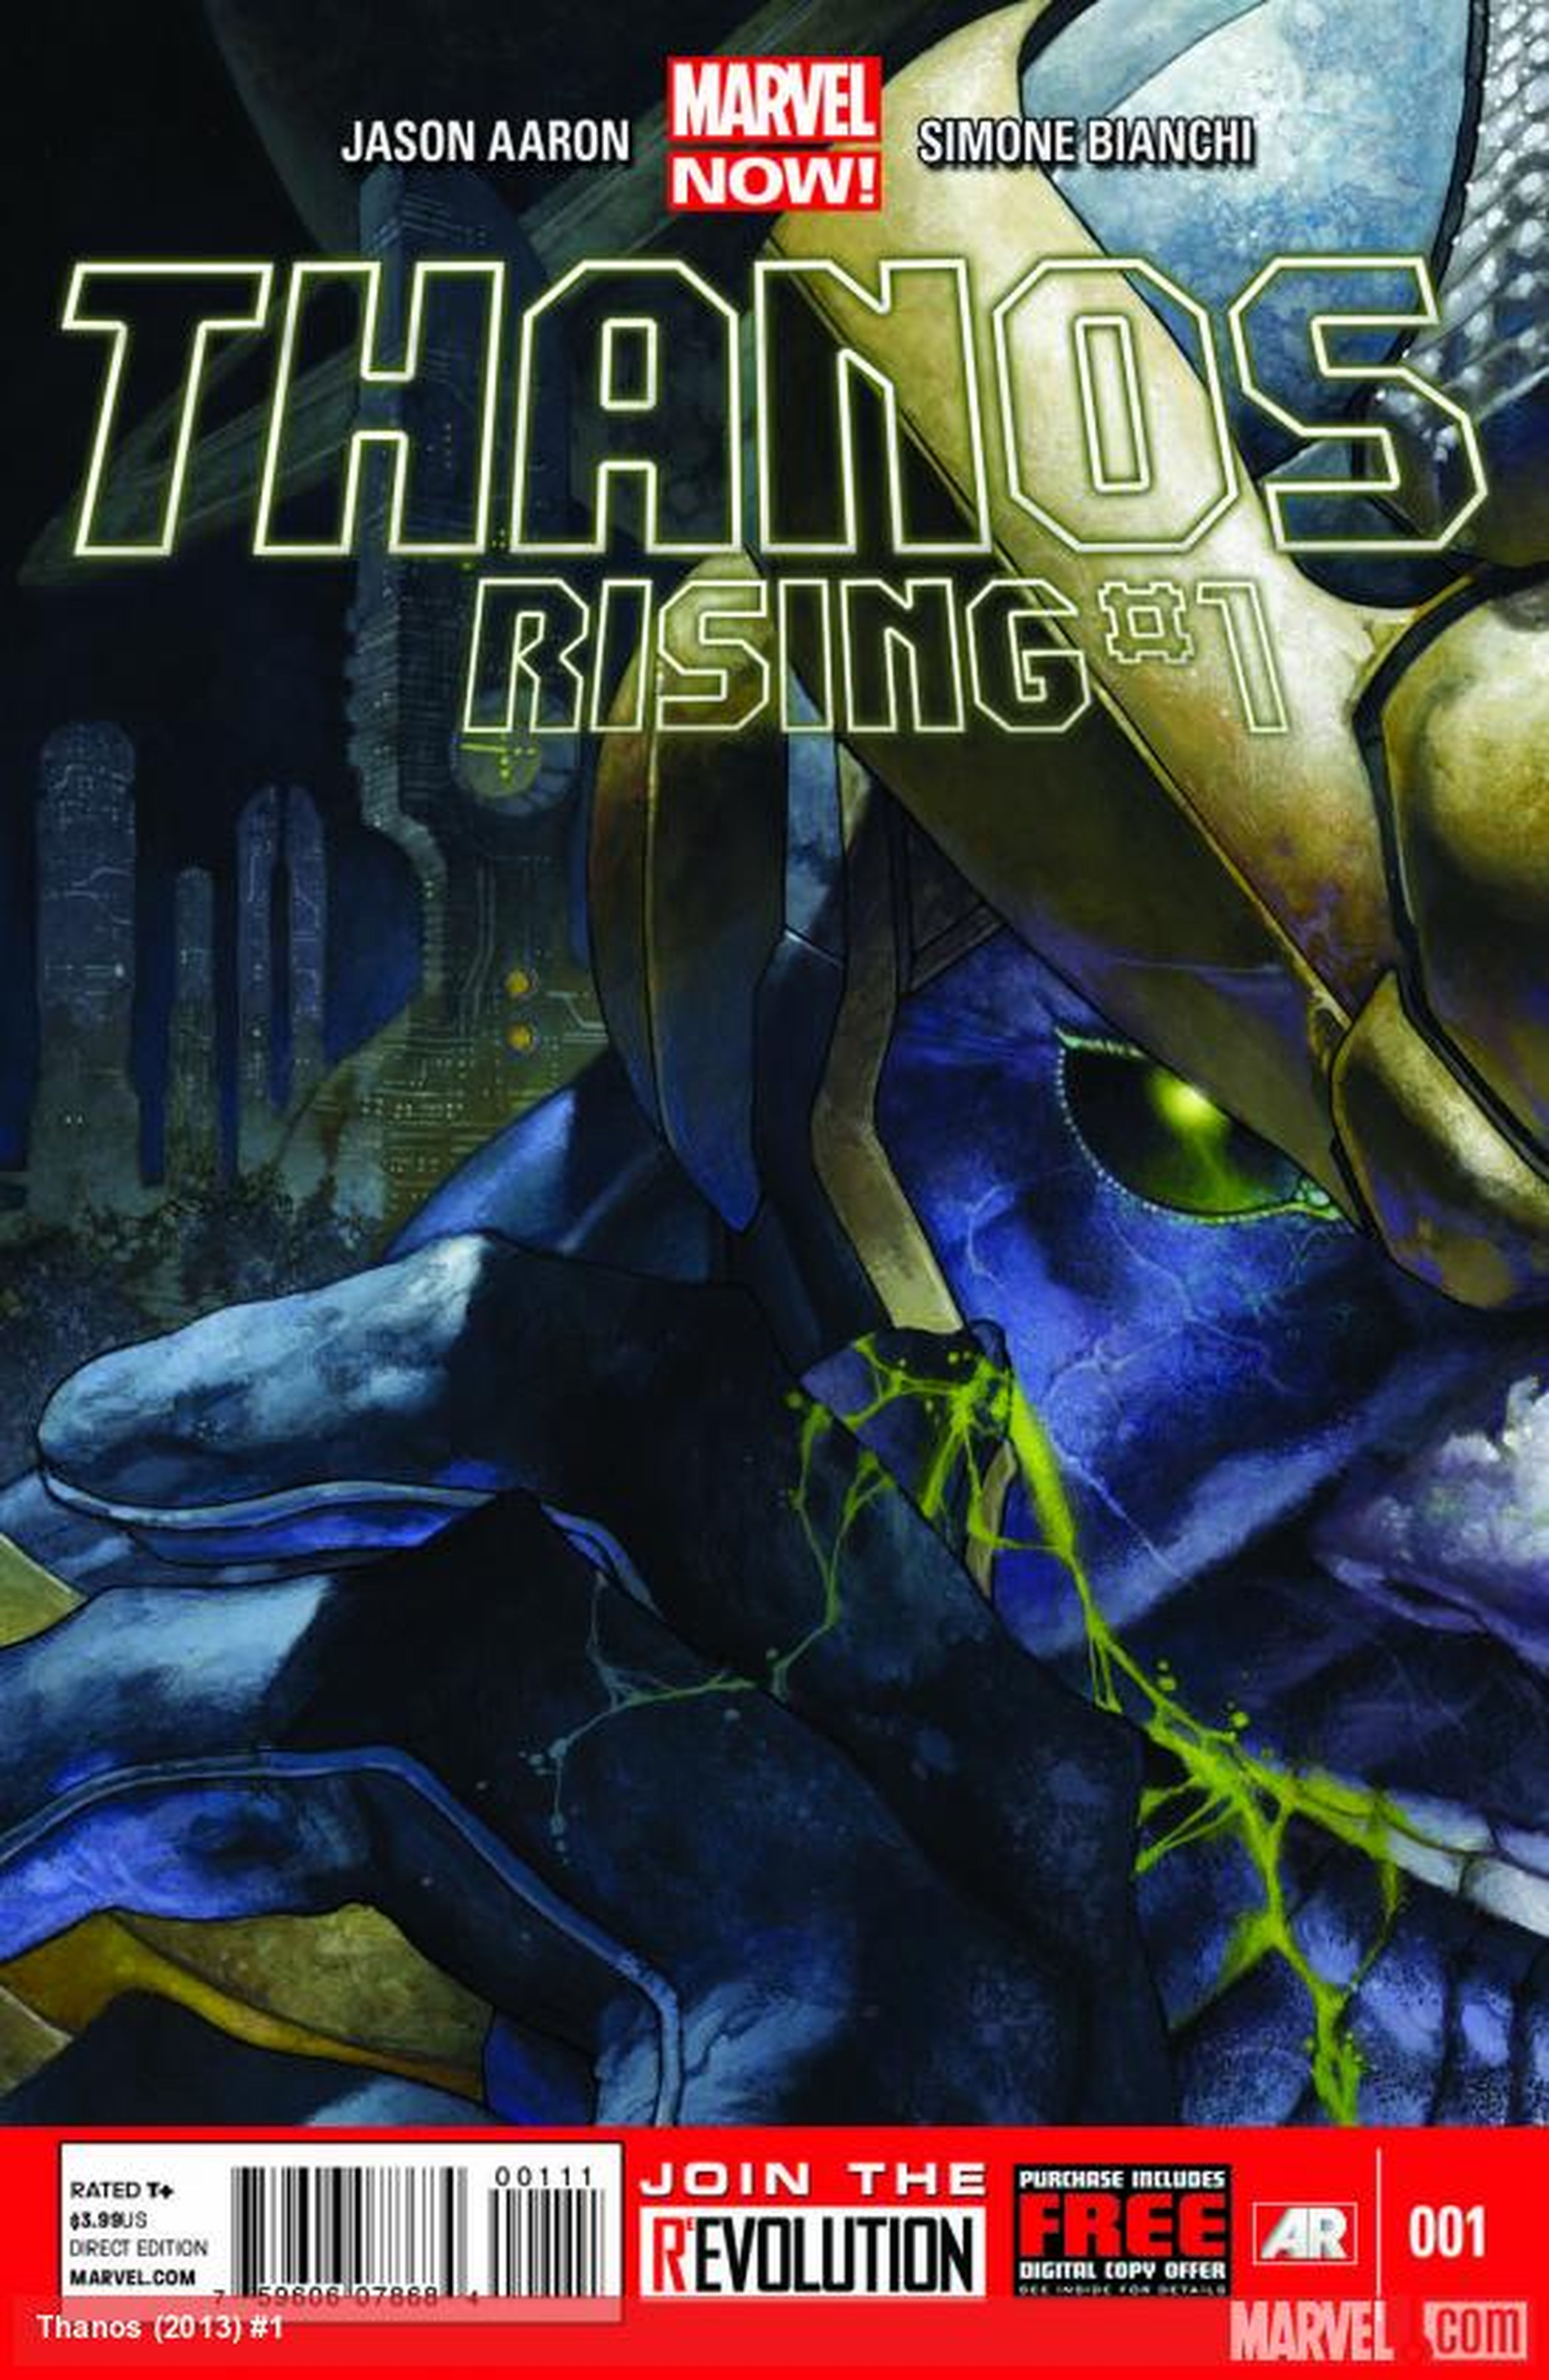 EEUU: Marvel anuncia Thanos Rising